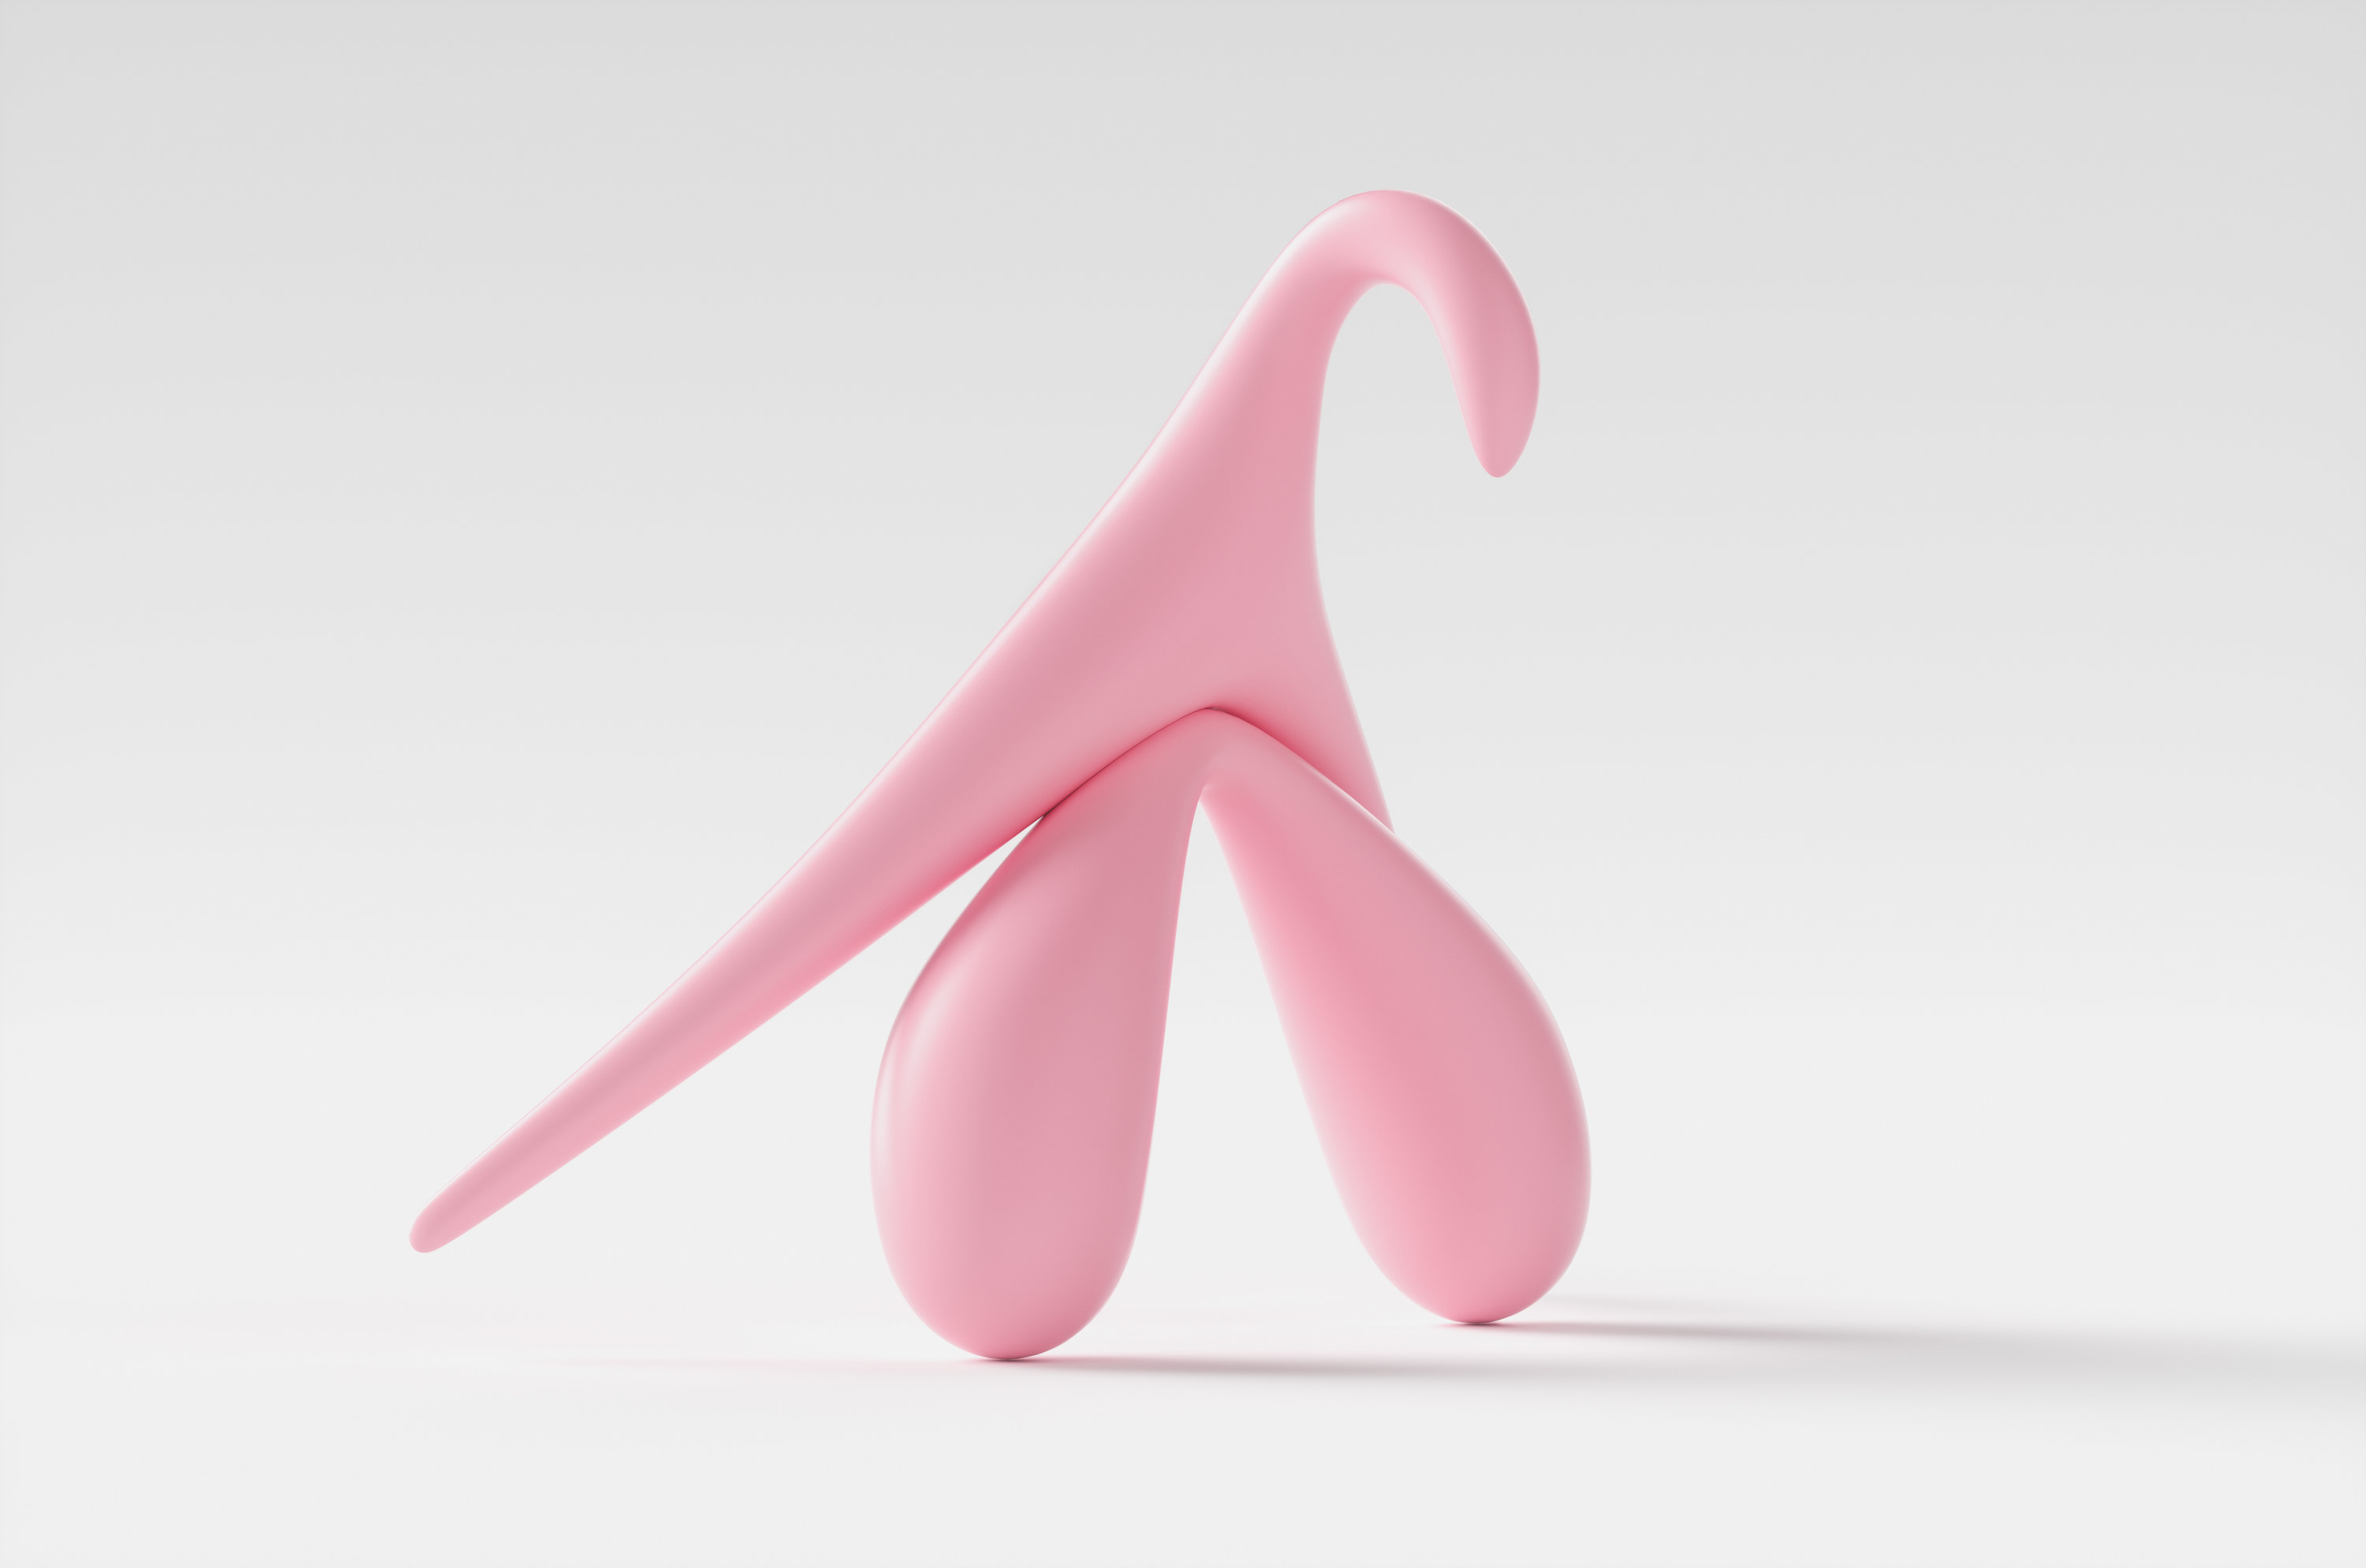 A stock image of a plastic clitoris model